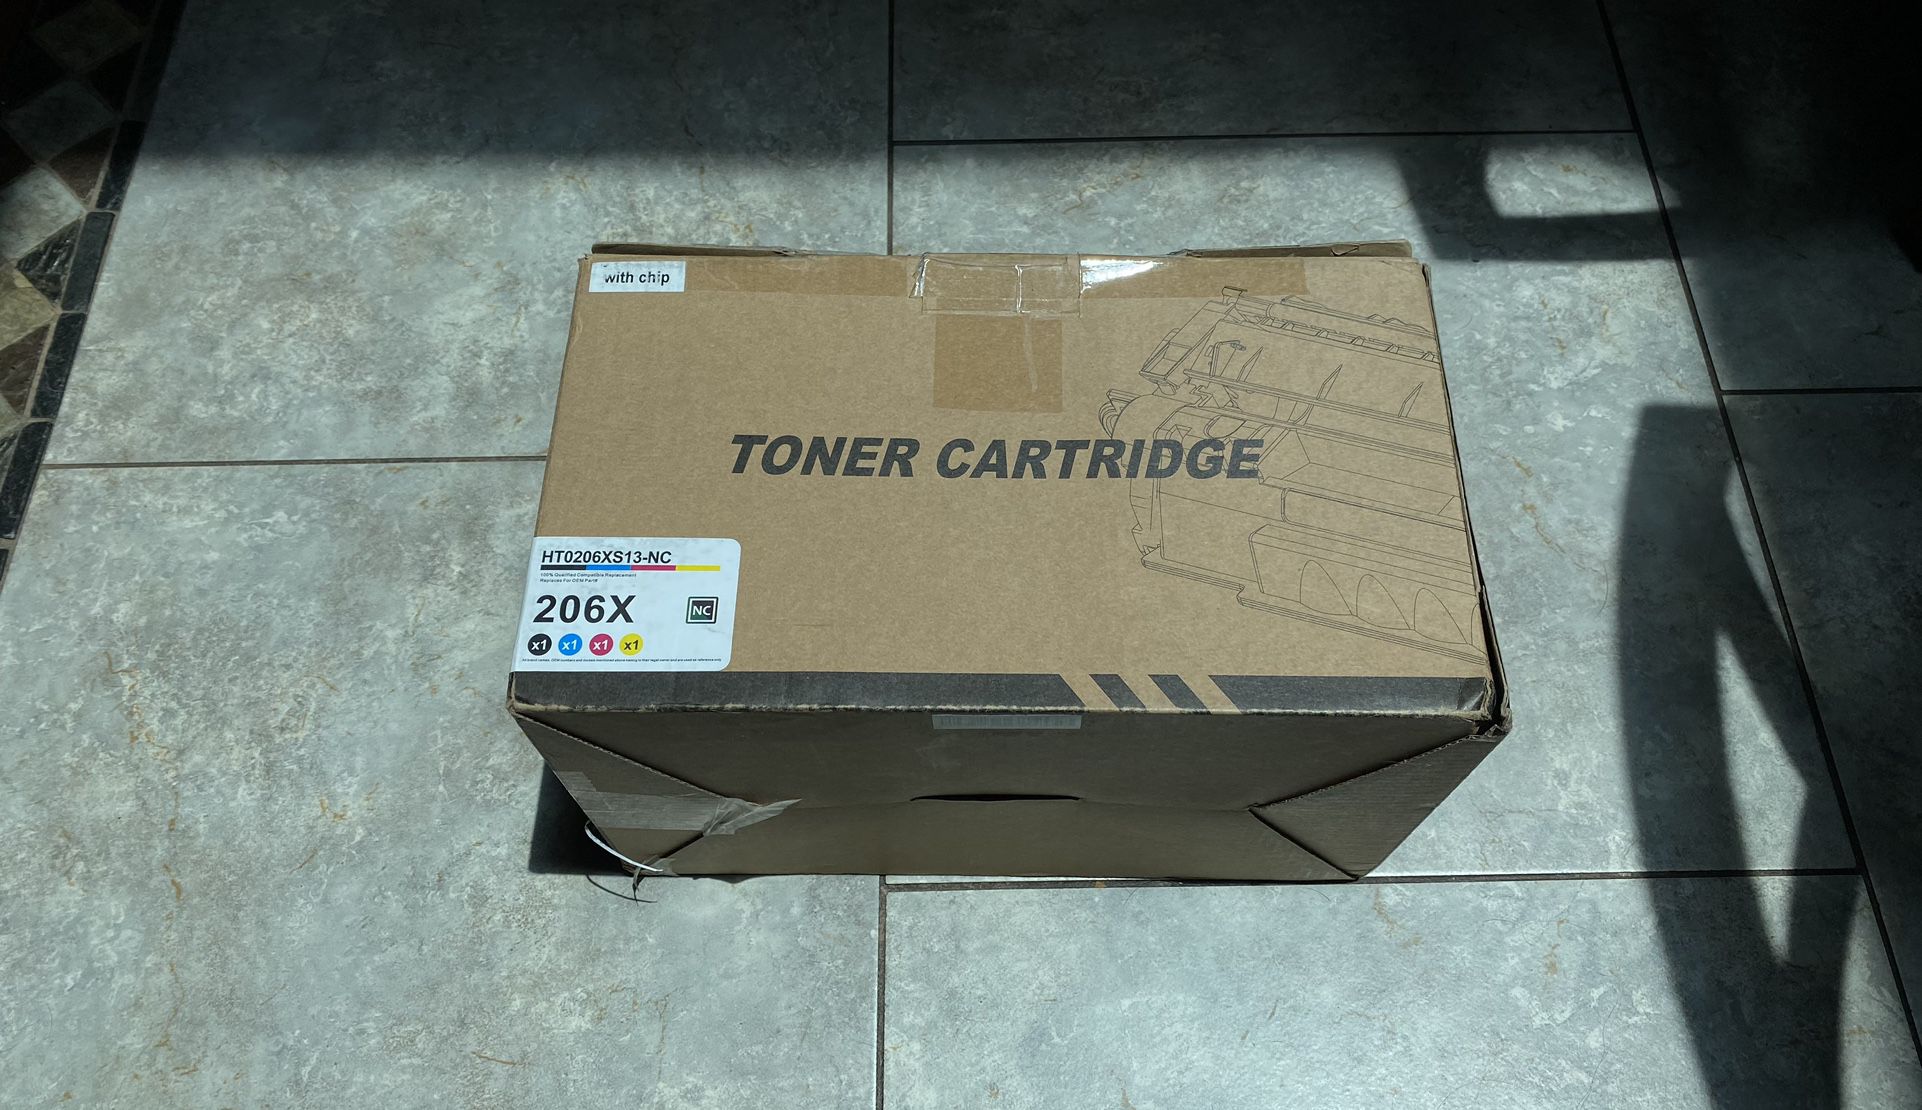 206x 4 count Printer Toner Cartridges 